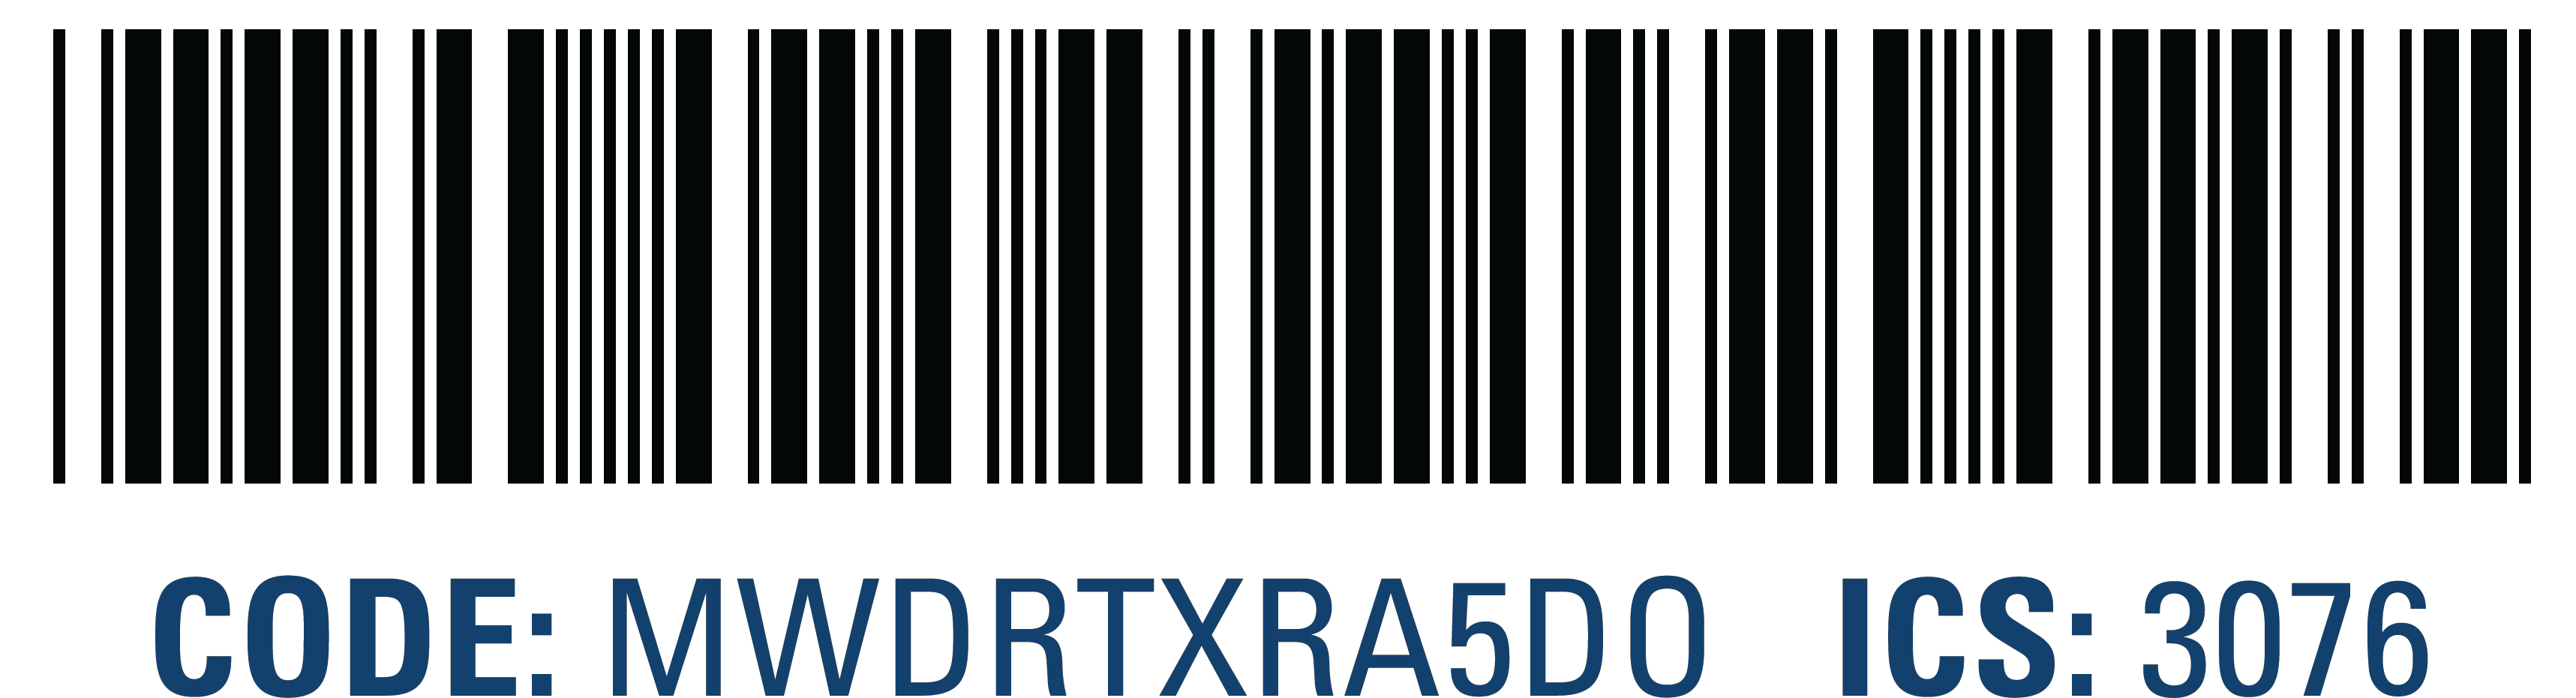 T5_CW_Barcode_MWDRTXRA5DO P10 SMS $5 Off